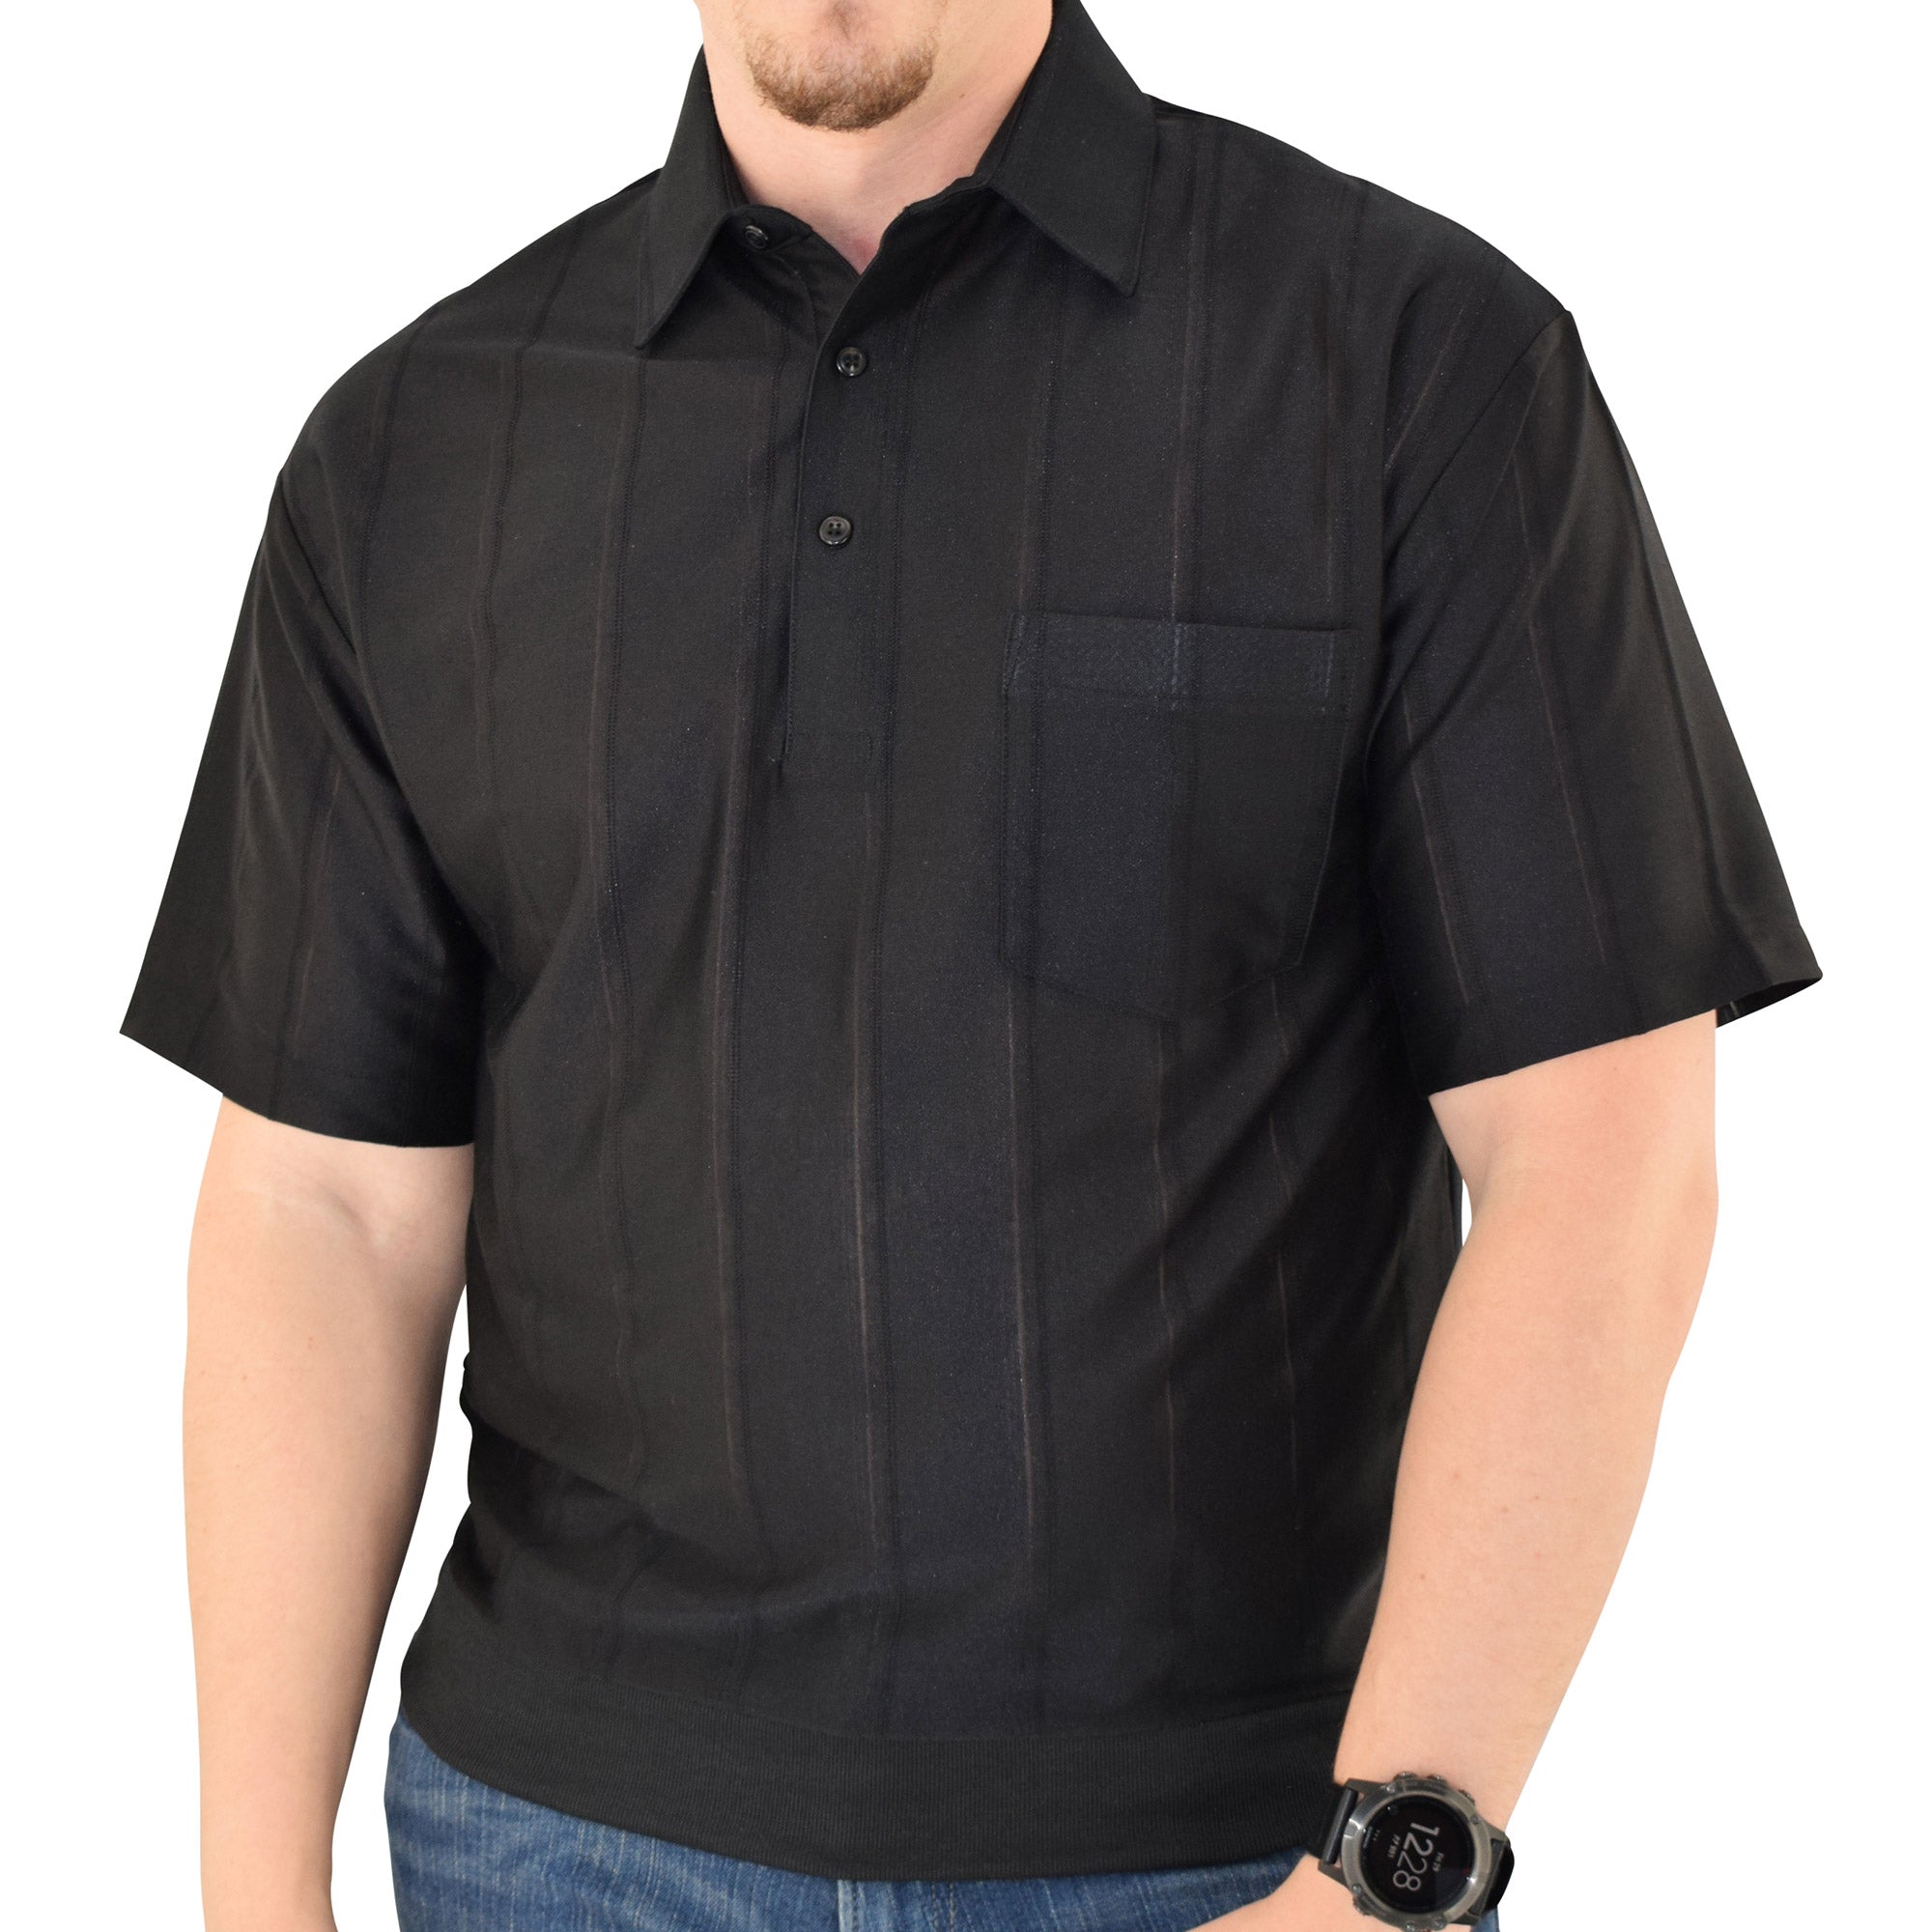 Big and Tall Tone on Tone Textured Knit Short Sleeve Banded Bottom Shirt - 6010-16BT-Black - bandedbottom